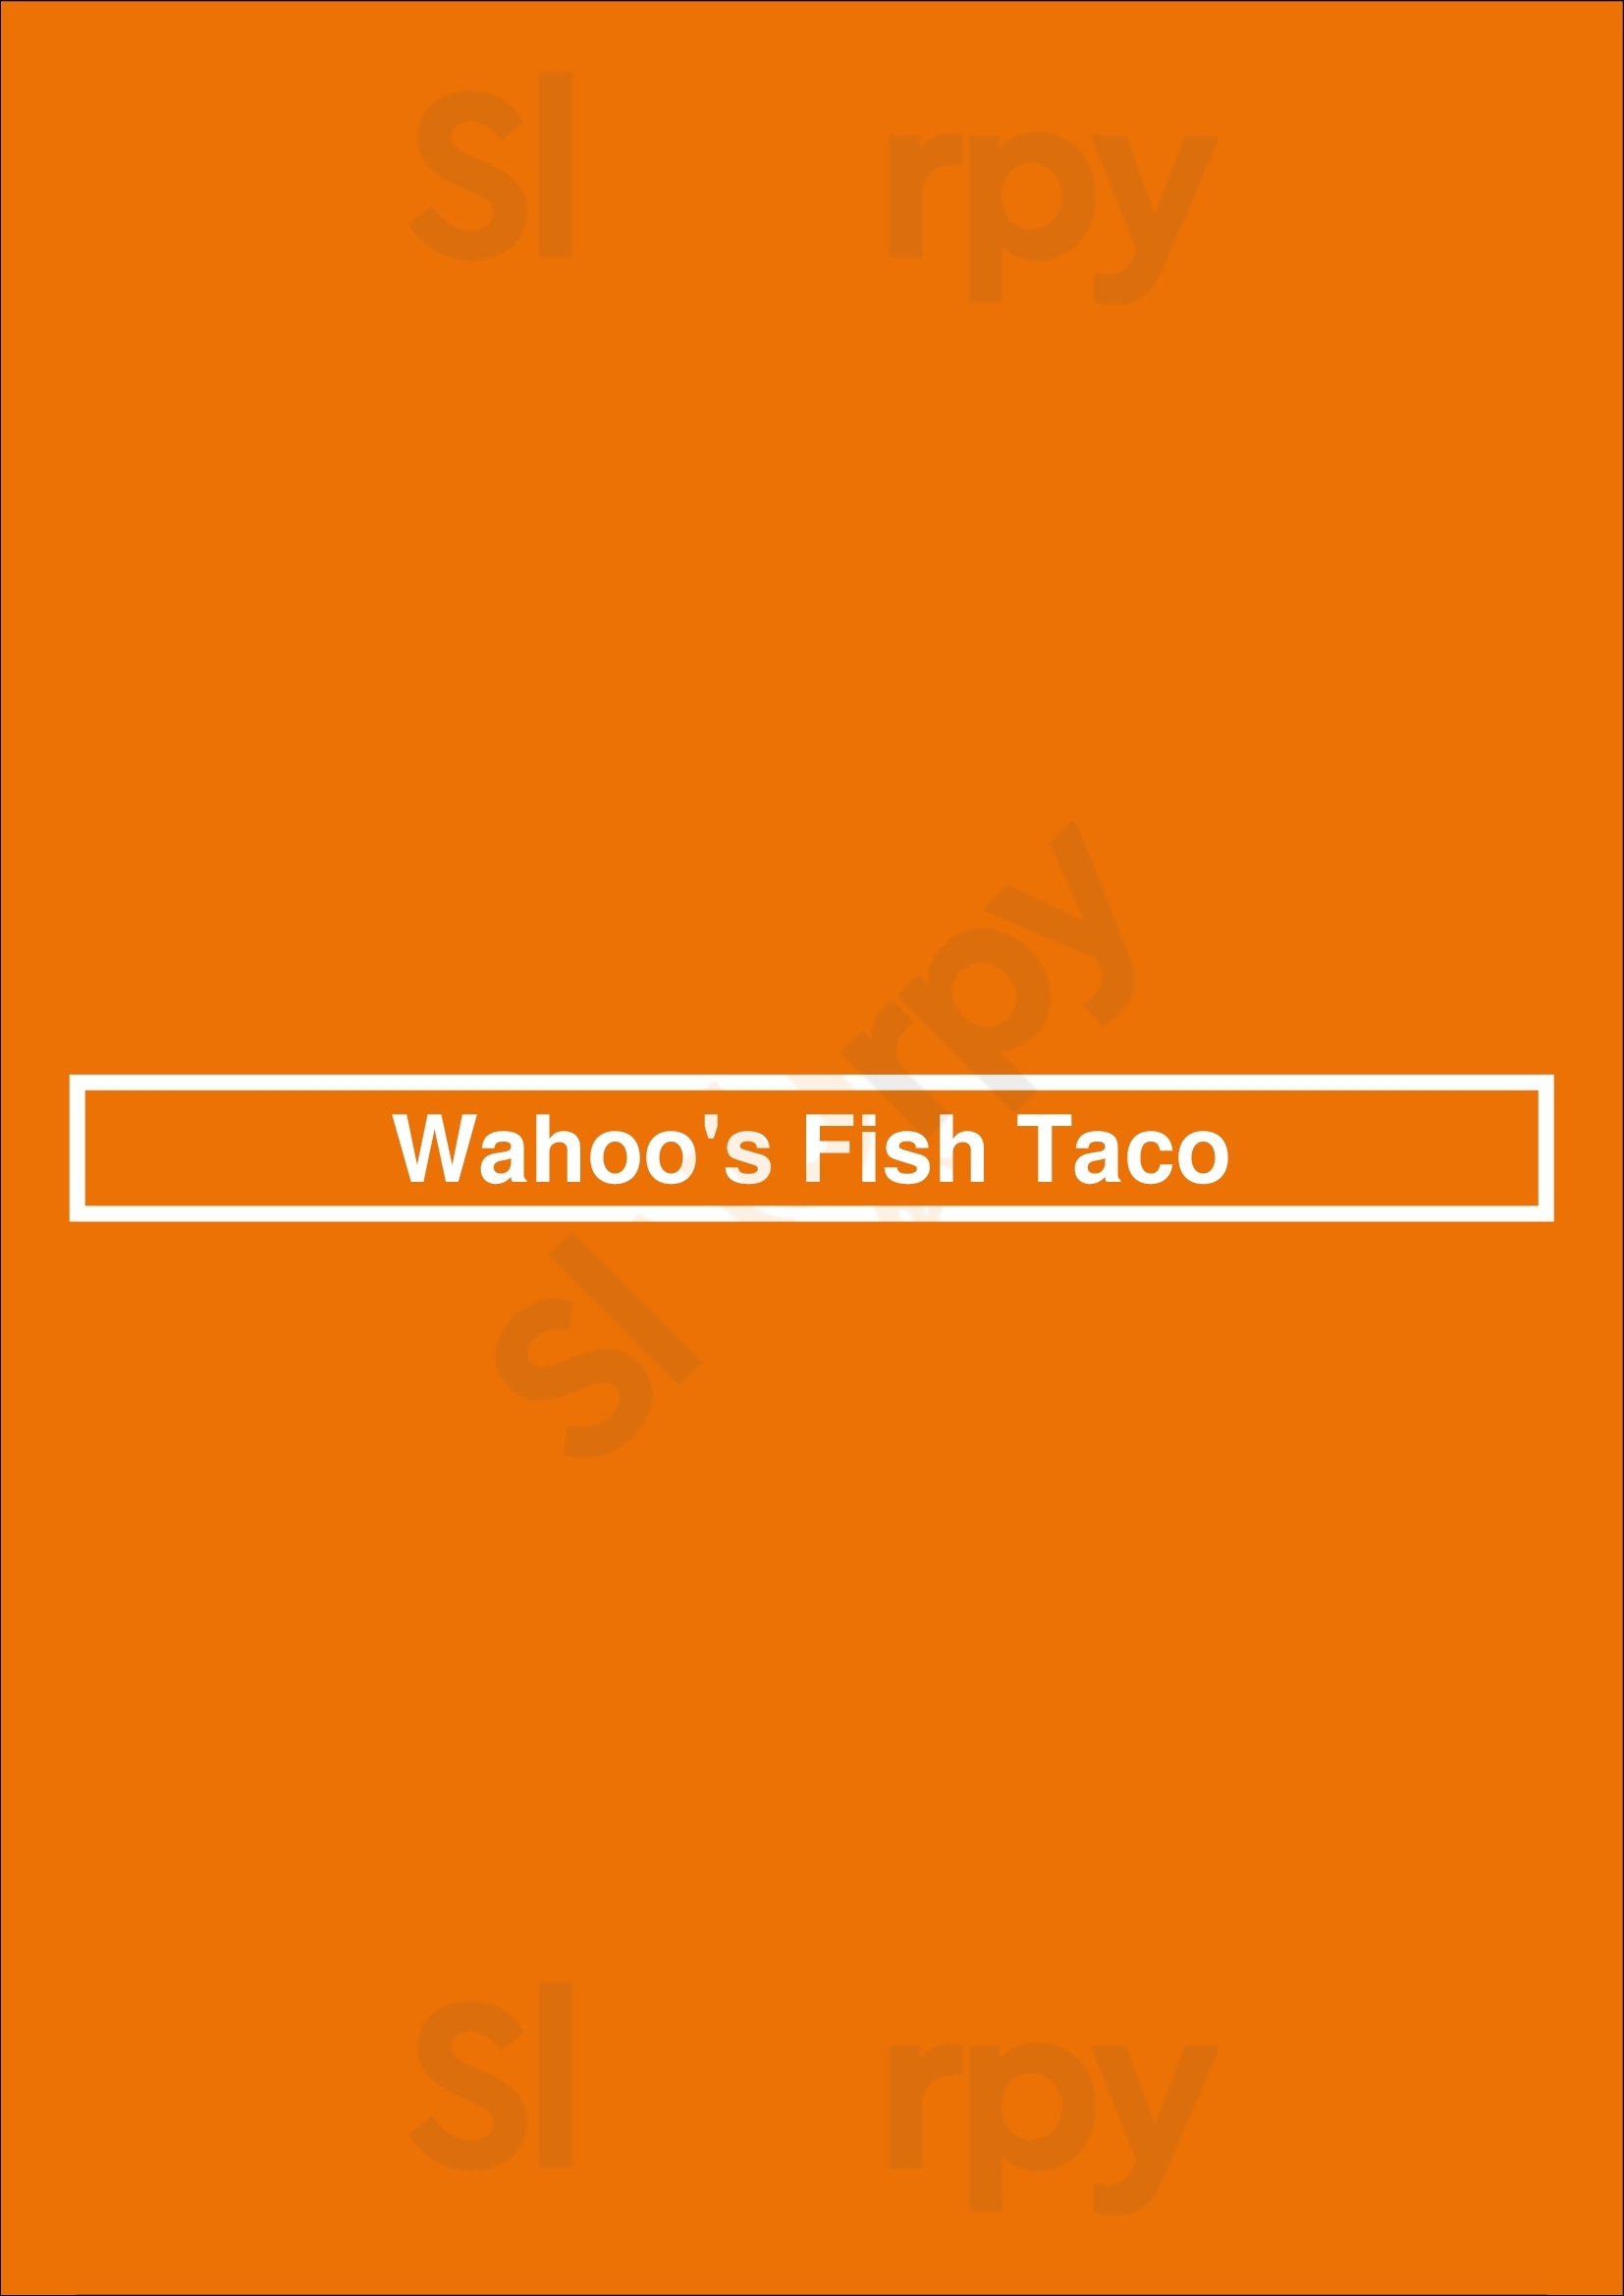 Wahoo's Fish Taco Lakewood Menu - 1